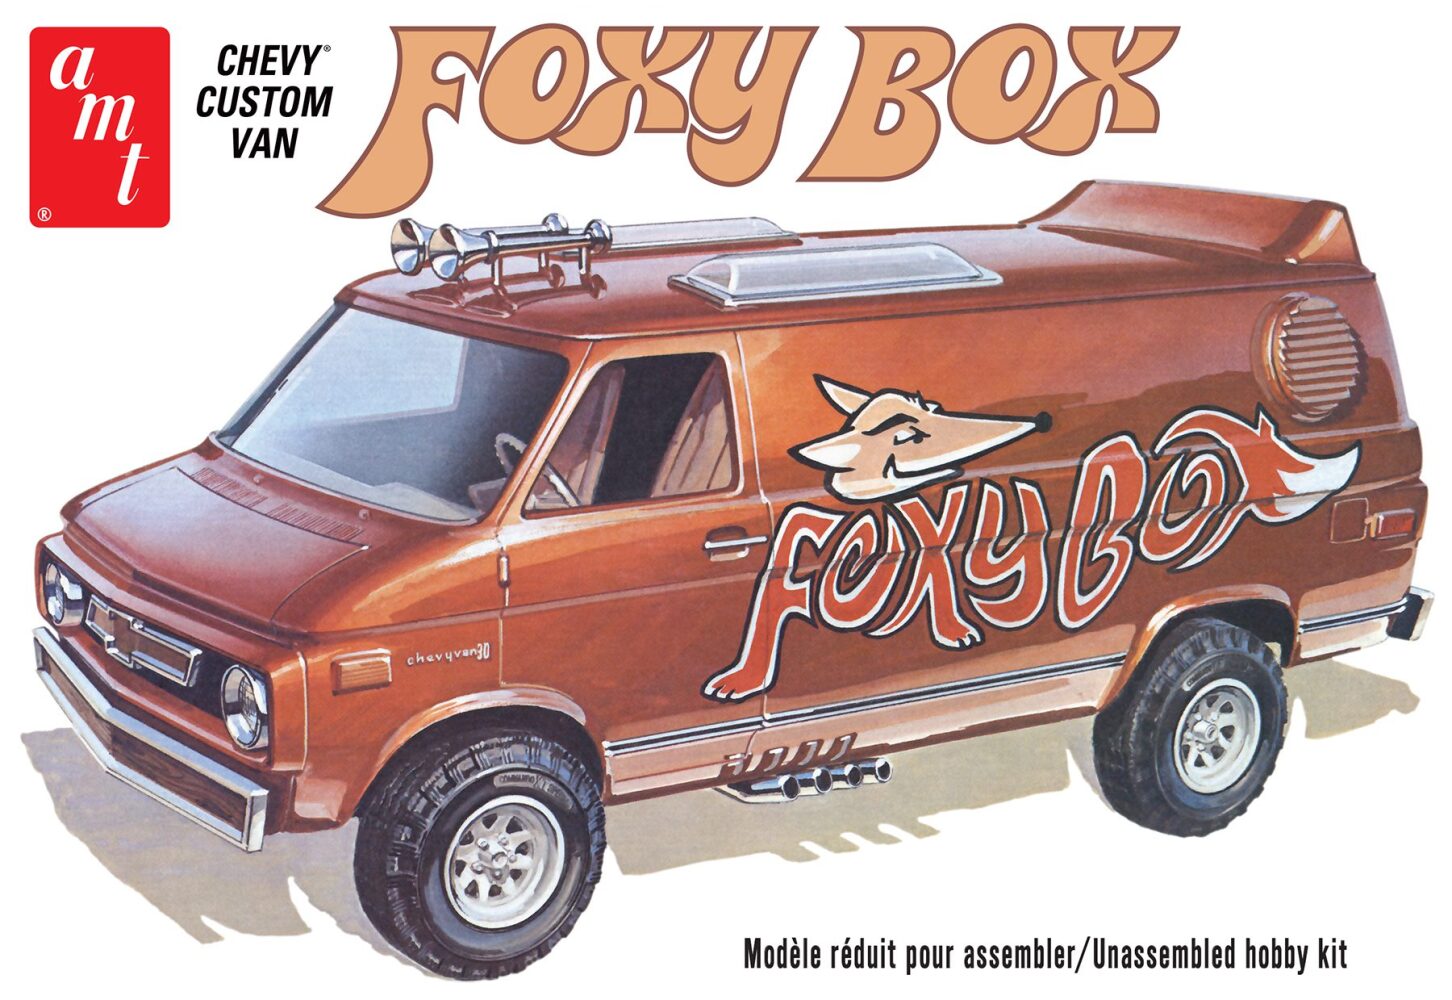 1975 CHEVY VAN "FOXY BOX"